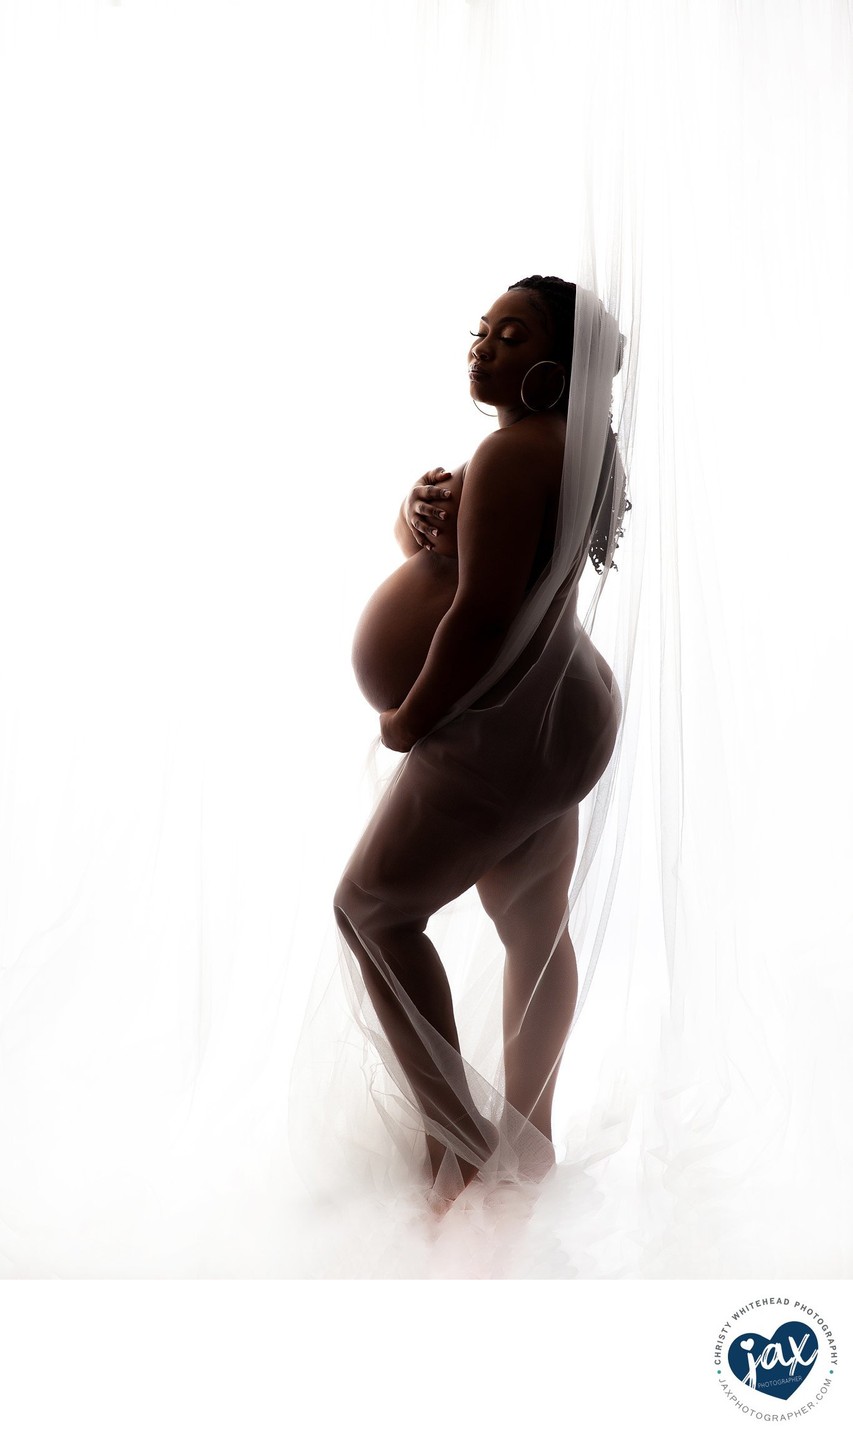 Nude pregnancy photos, Jacksonville, FL